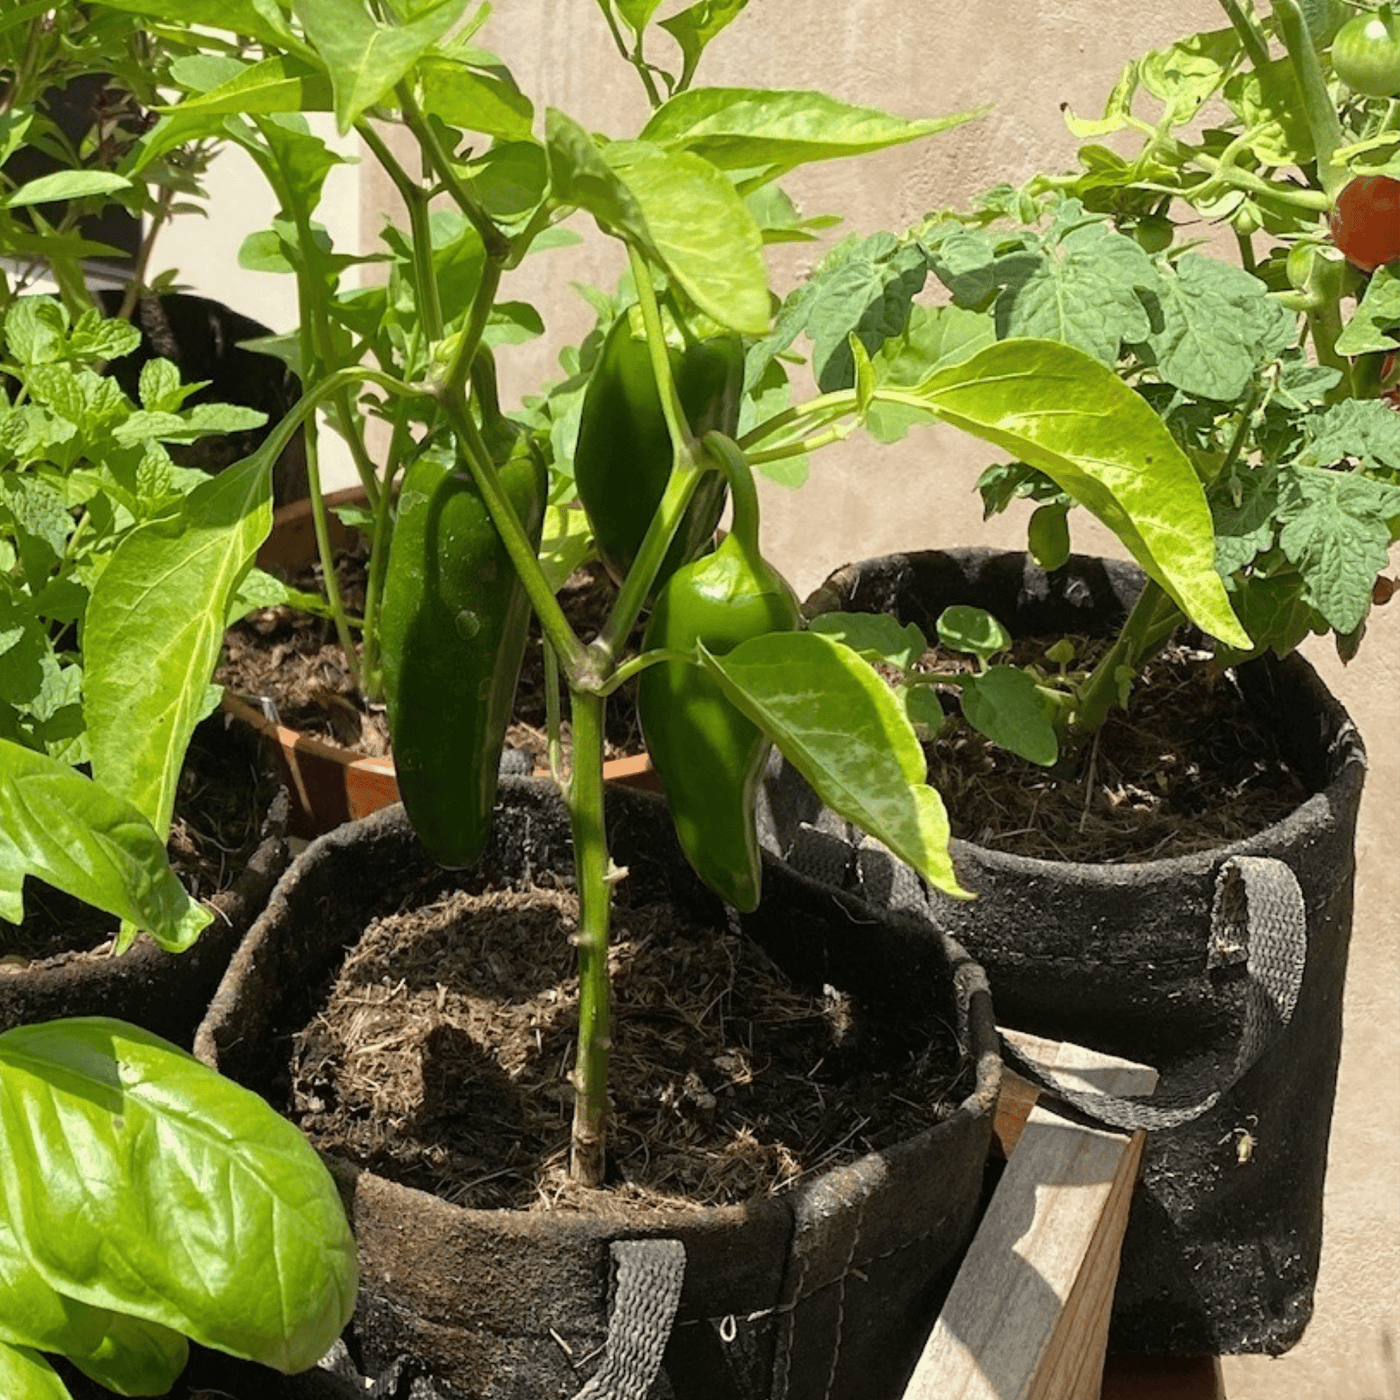 Jalapeno Pepper Grow Kit